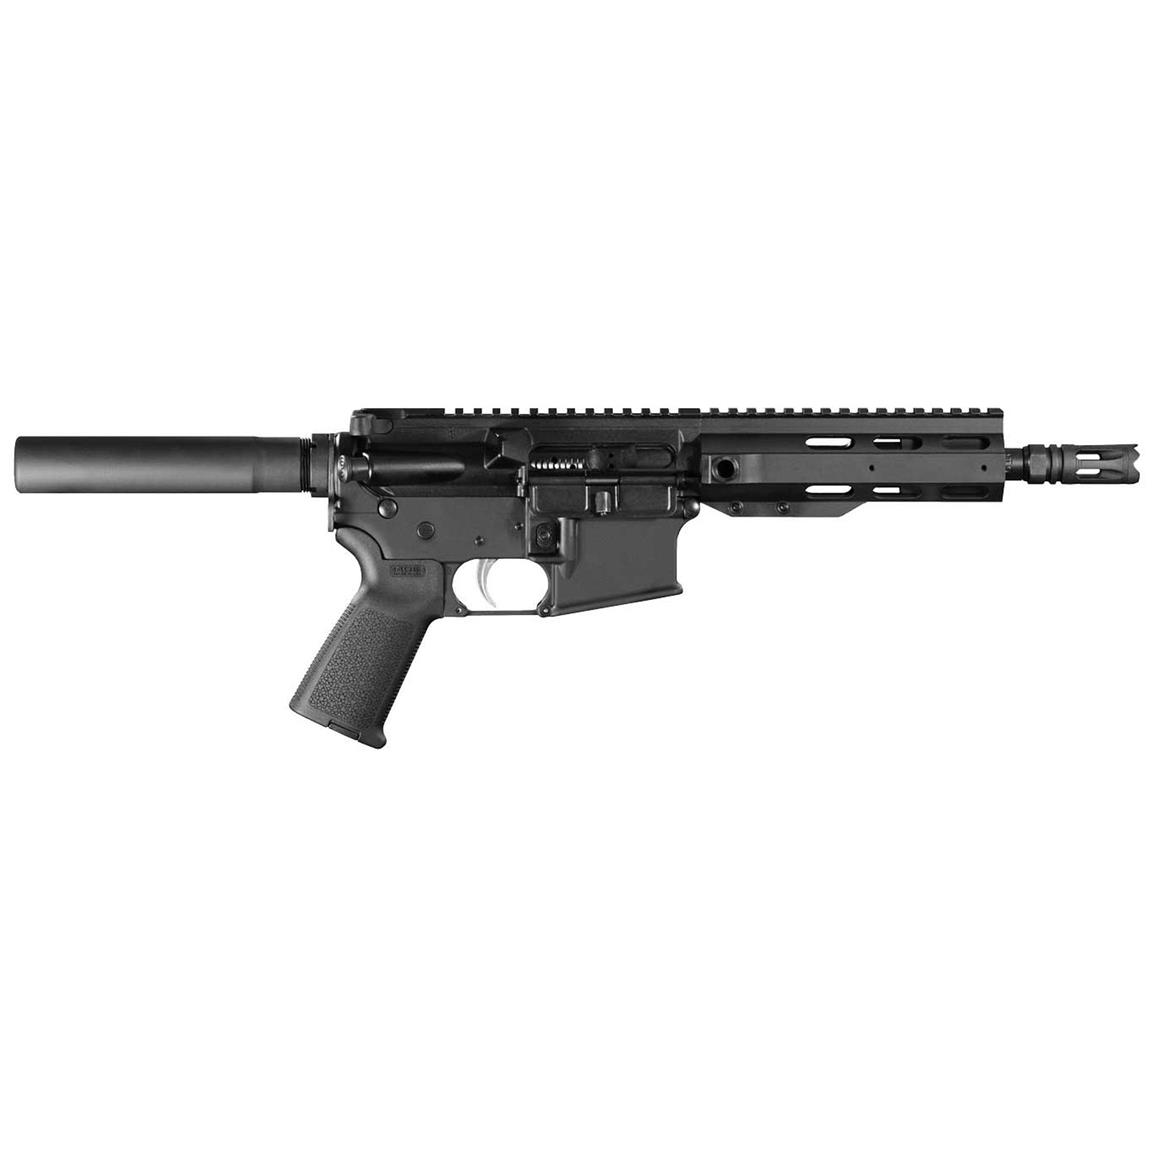 Anderson AM15 AR Pistol, Semi-automatic, 5.56x45mm, 76935, 784672476935, 7.5